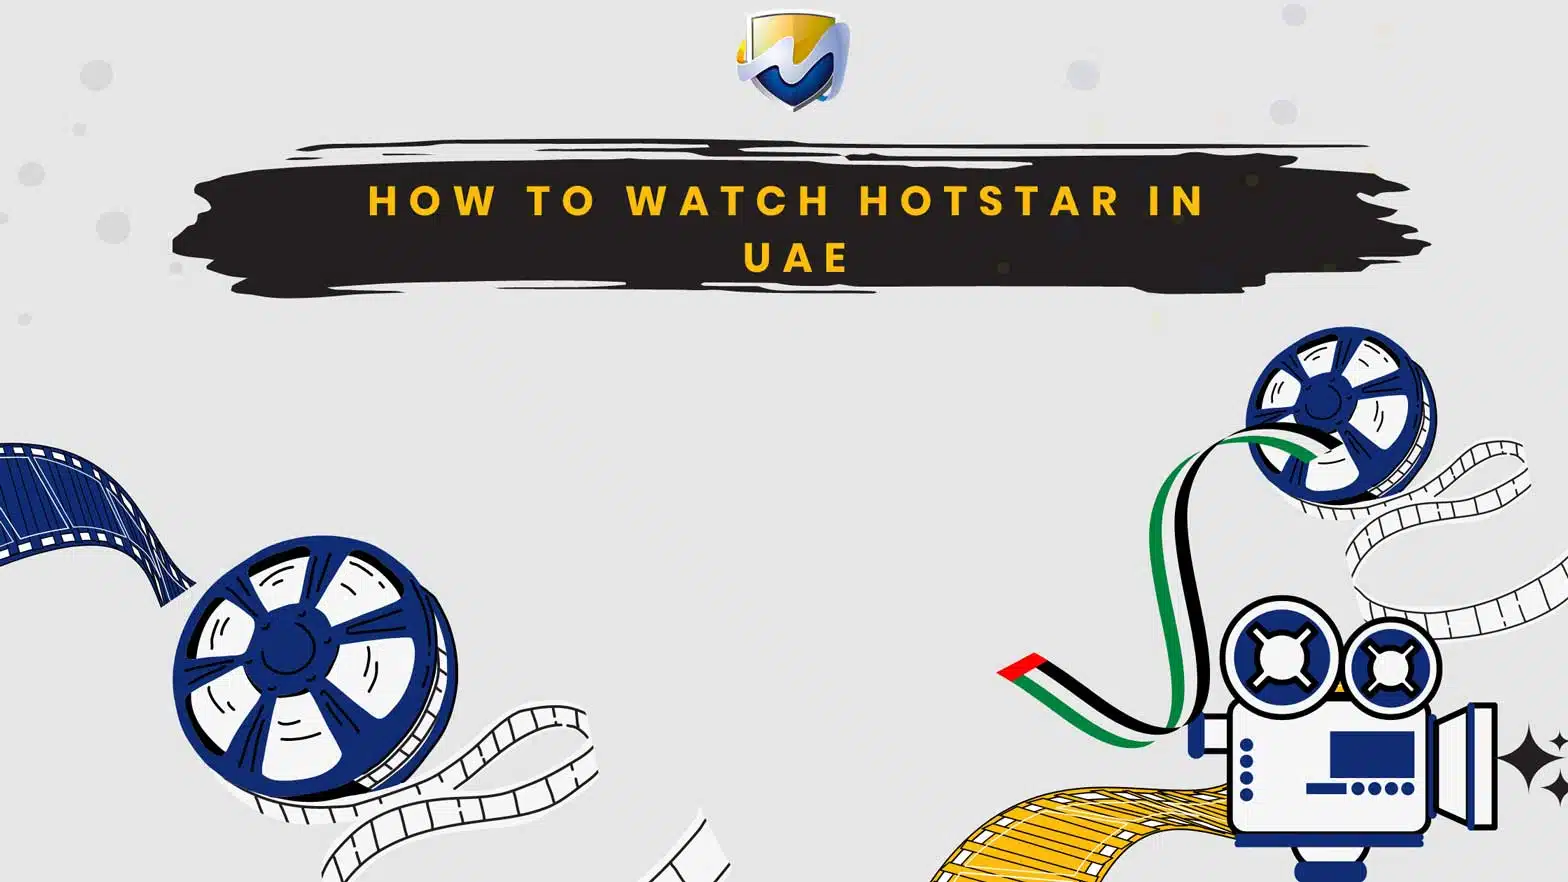 Watch hotstar